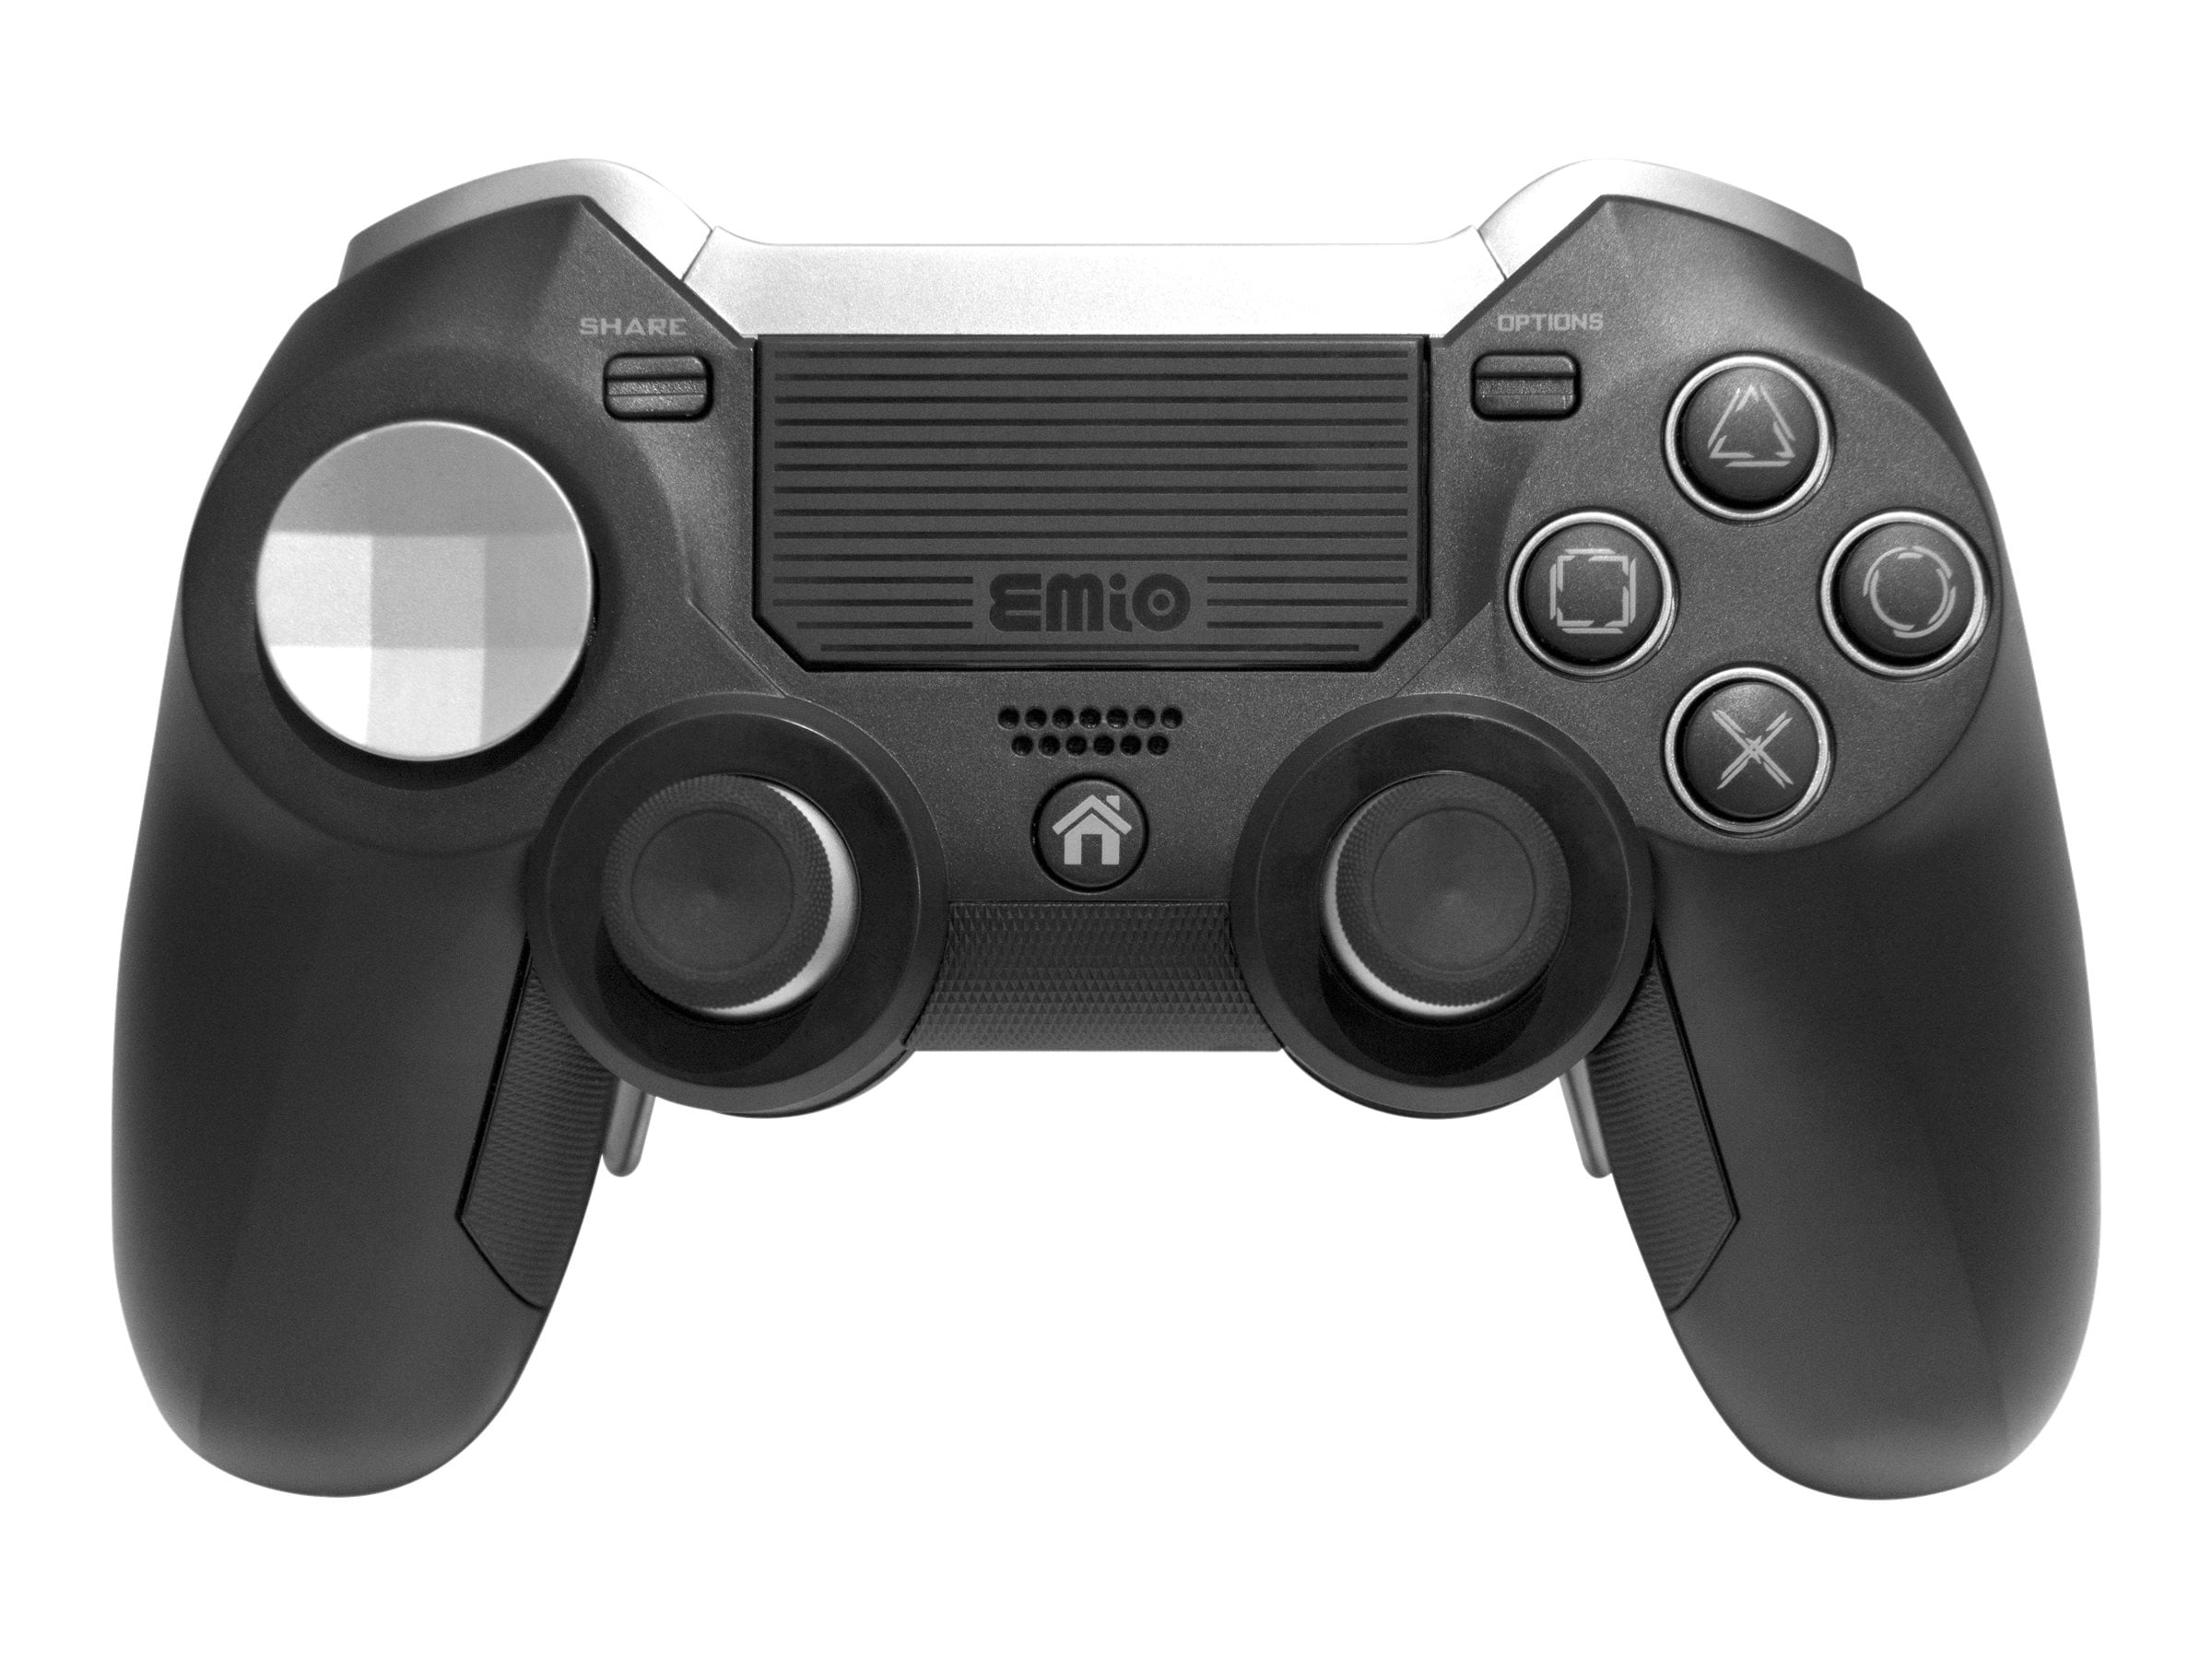 emio elite controller for playstation 4